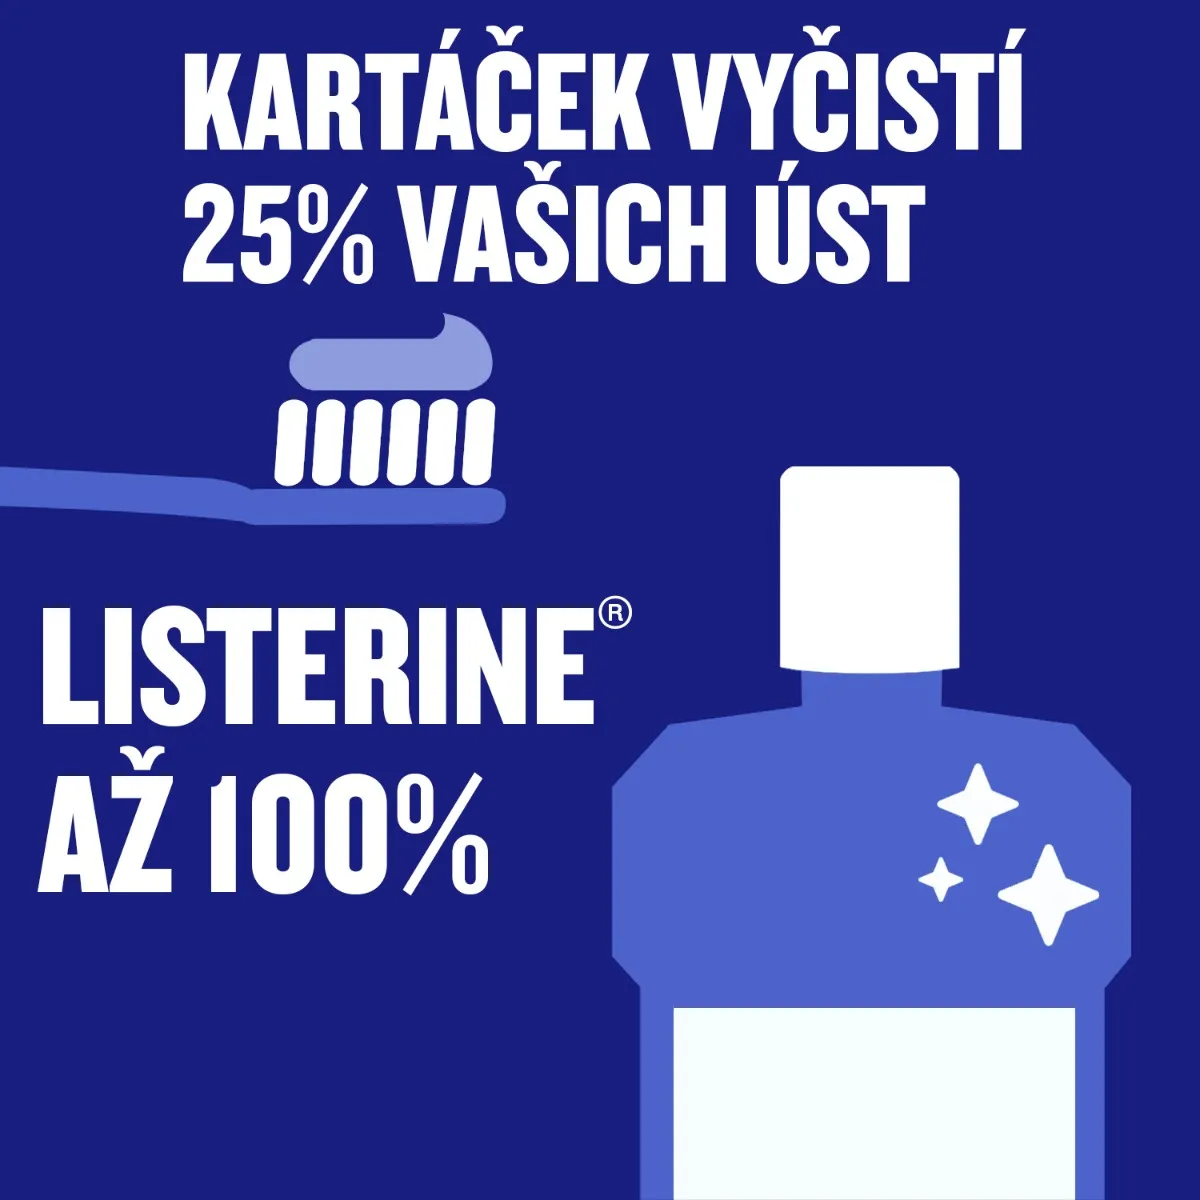 Listerine Advanced Nightly Reset ústní voda 400 ml